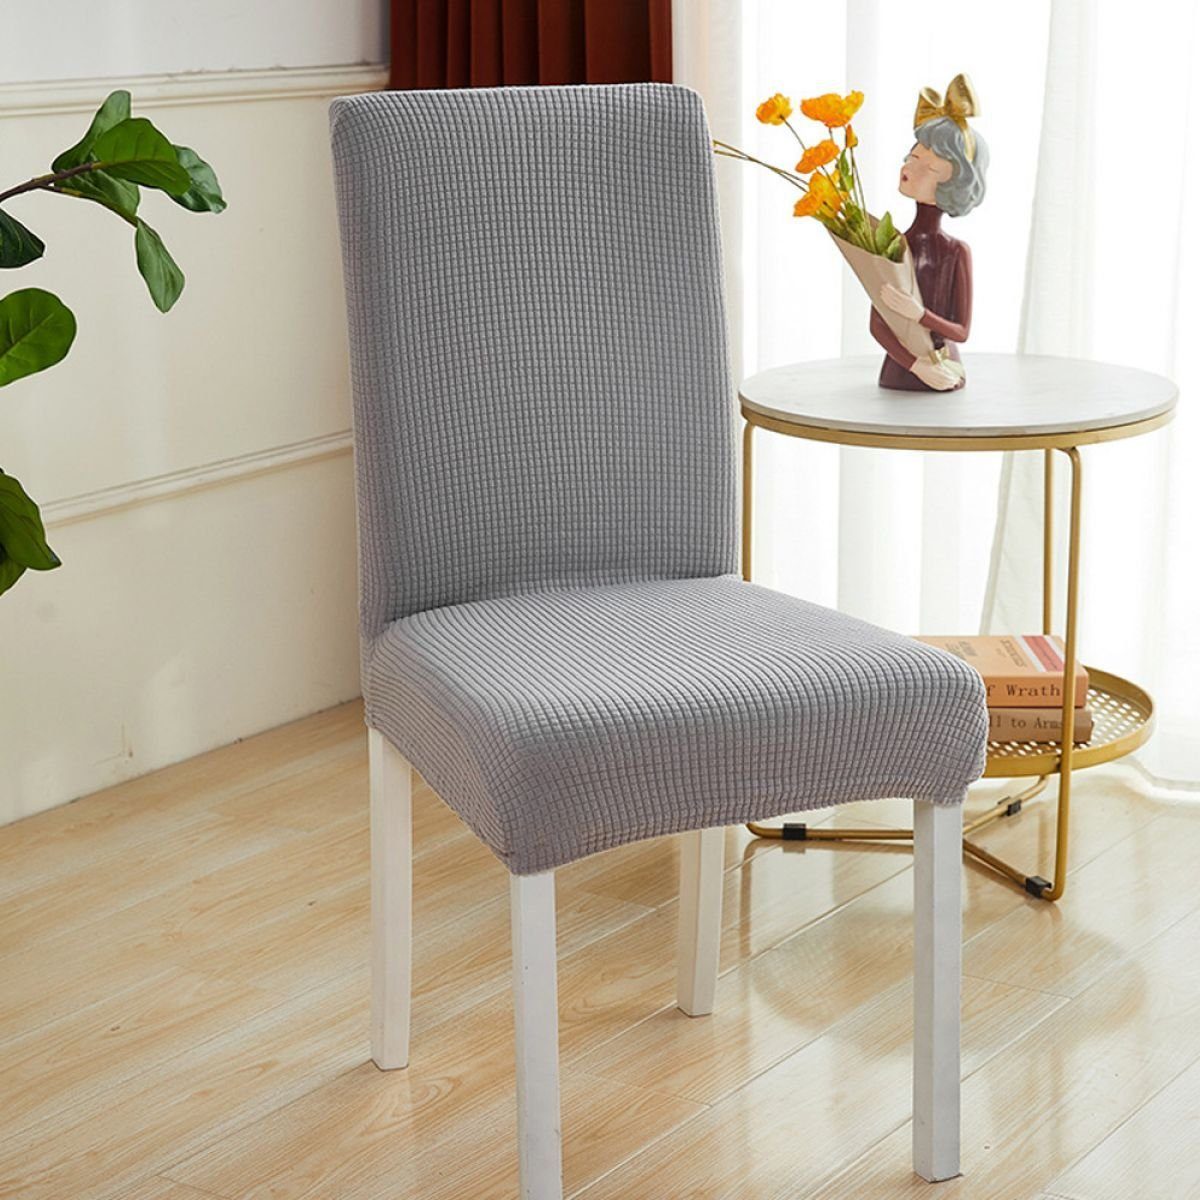 Abnehmbare Esszimmerstühle, Stretch Stuhlbezug Waschbar Stuhlbezug Juoungle für grau